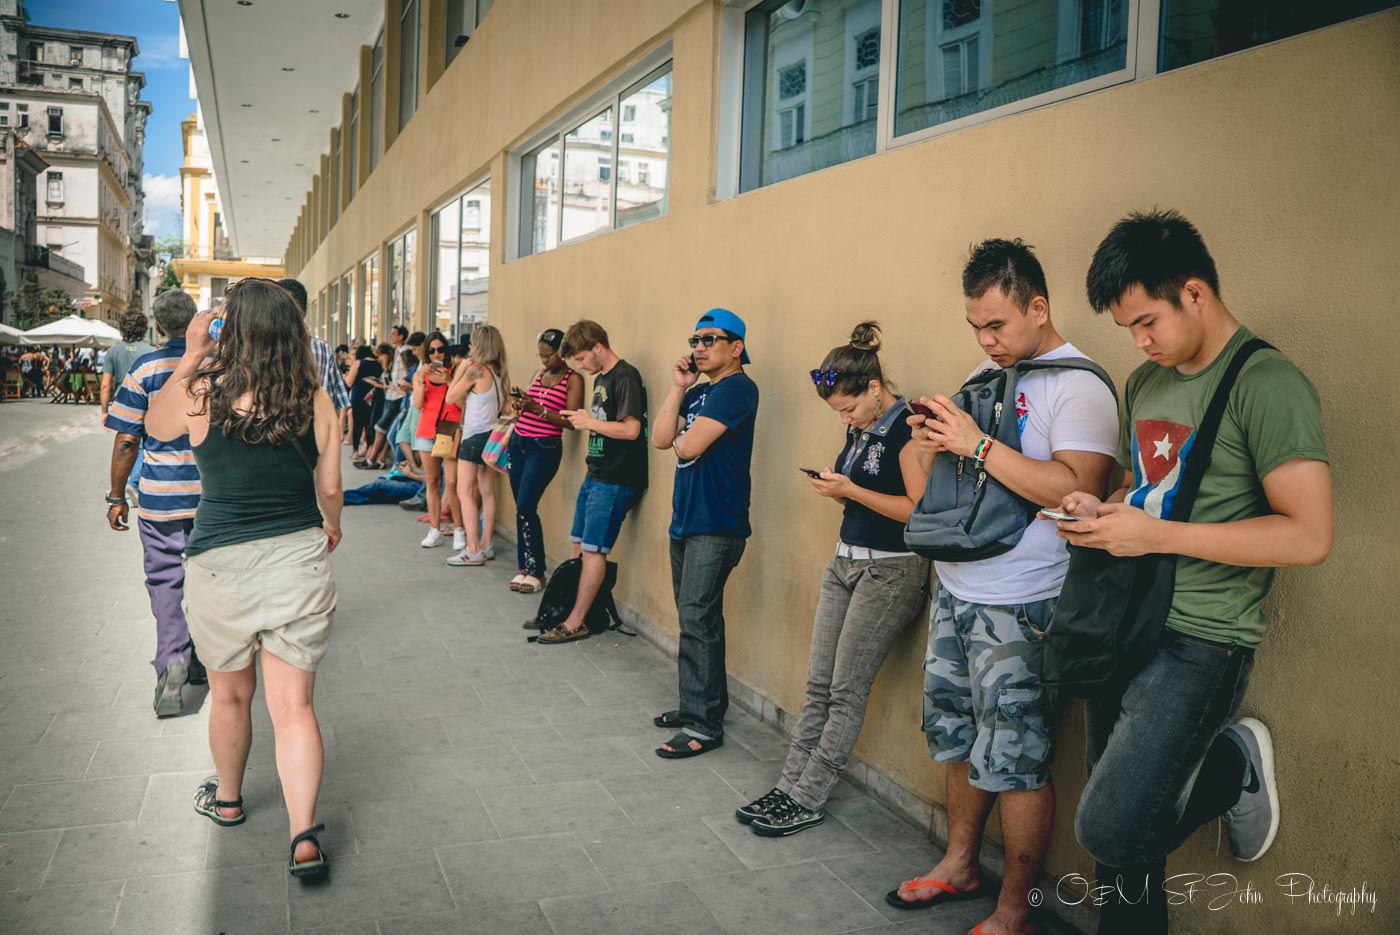 Internet in Cuba: Locals and visitors accessing the internet in Havana, Cuba